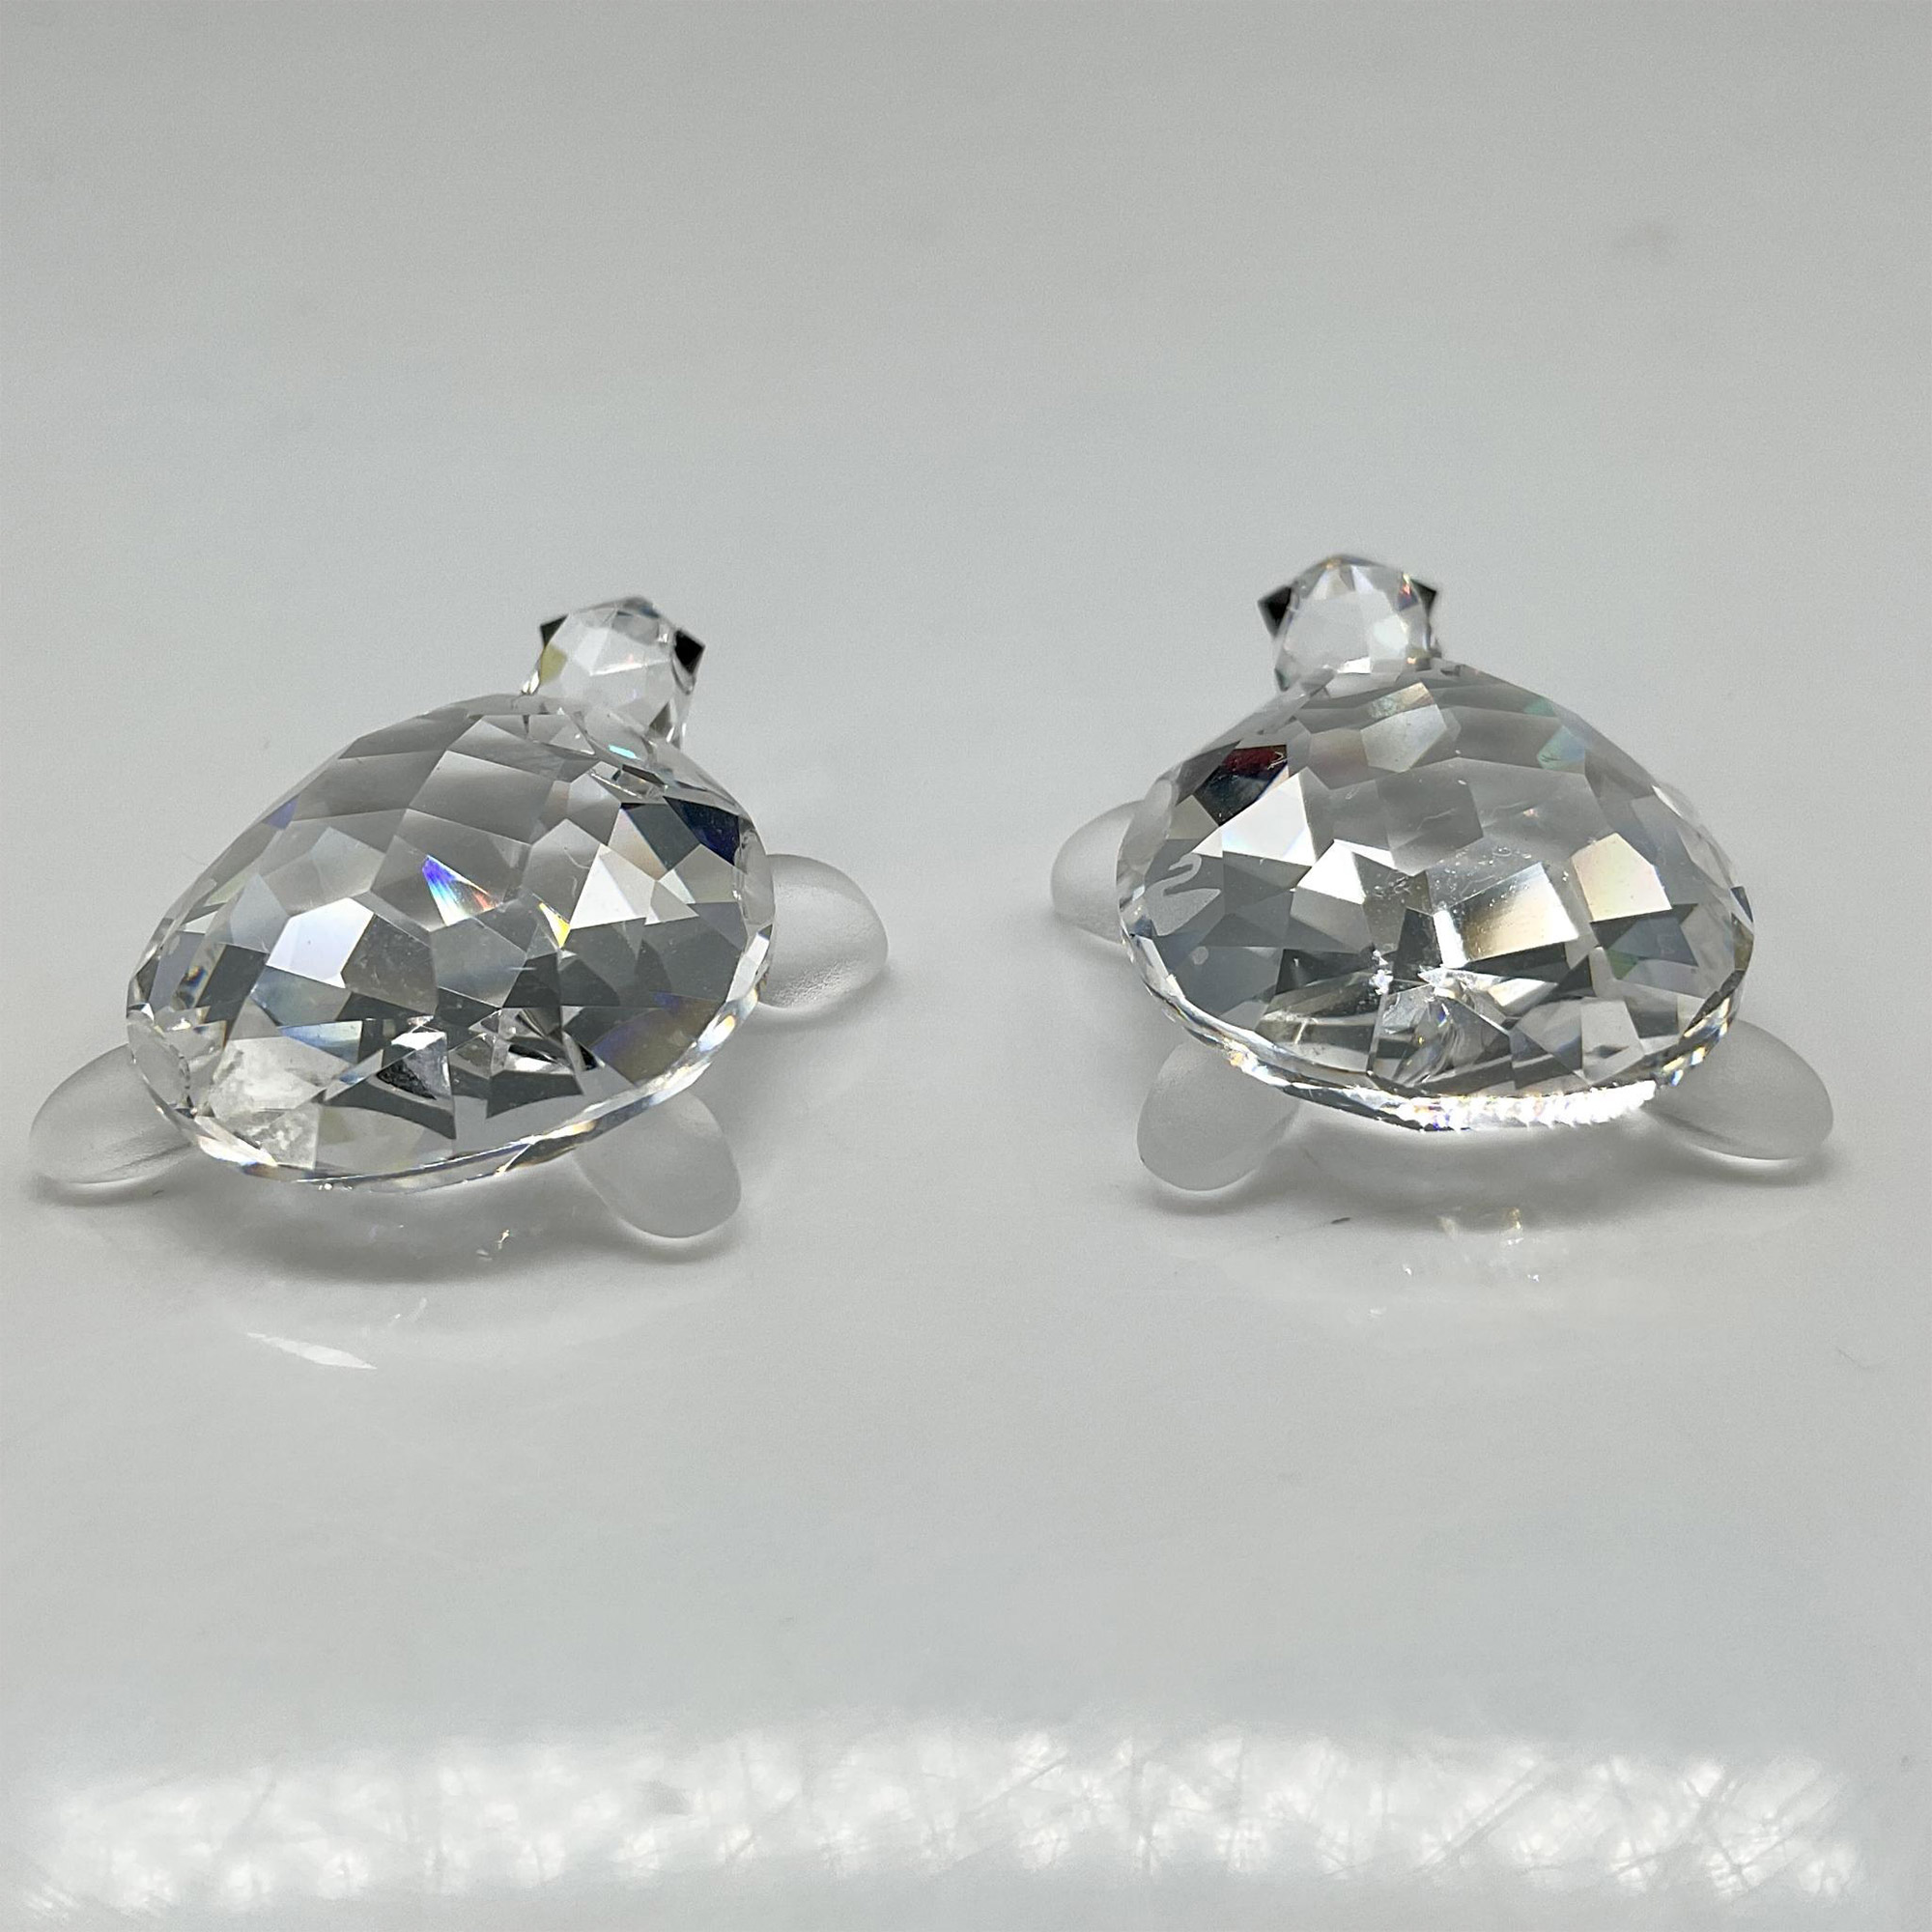 Swarovski Silver Crystal Figurines, Baby Tortoises - Image 2 of 4